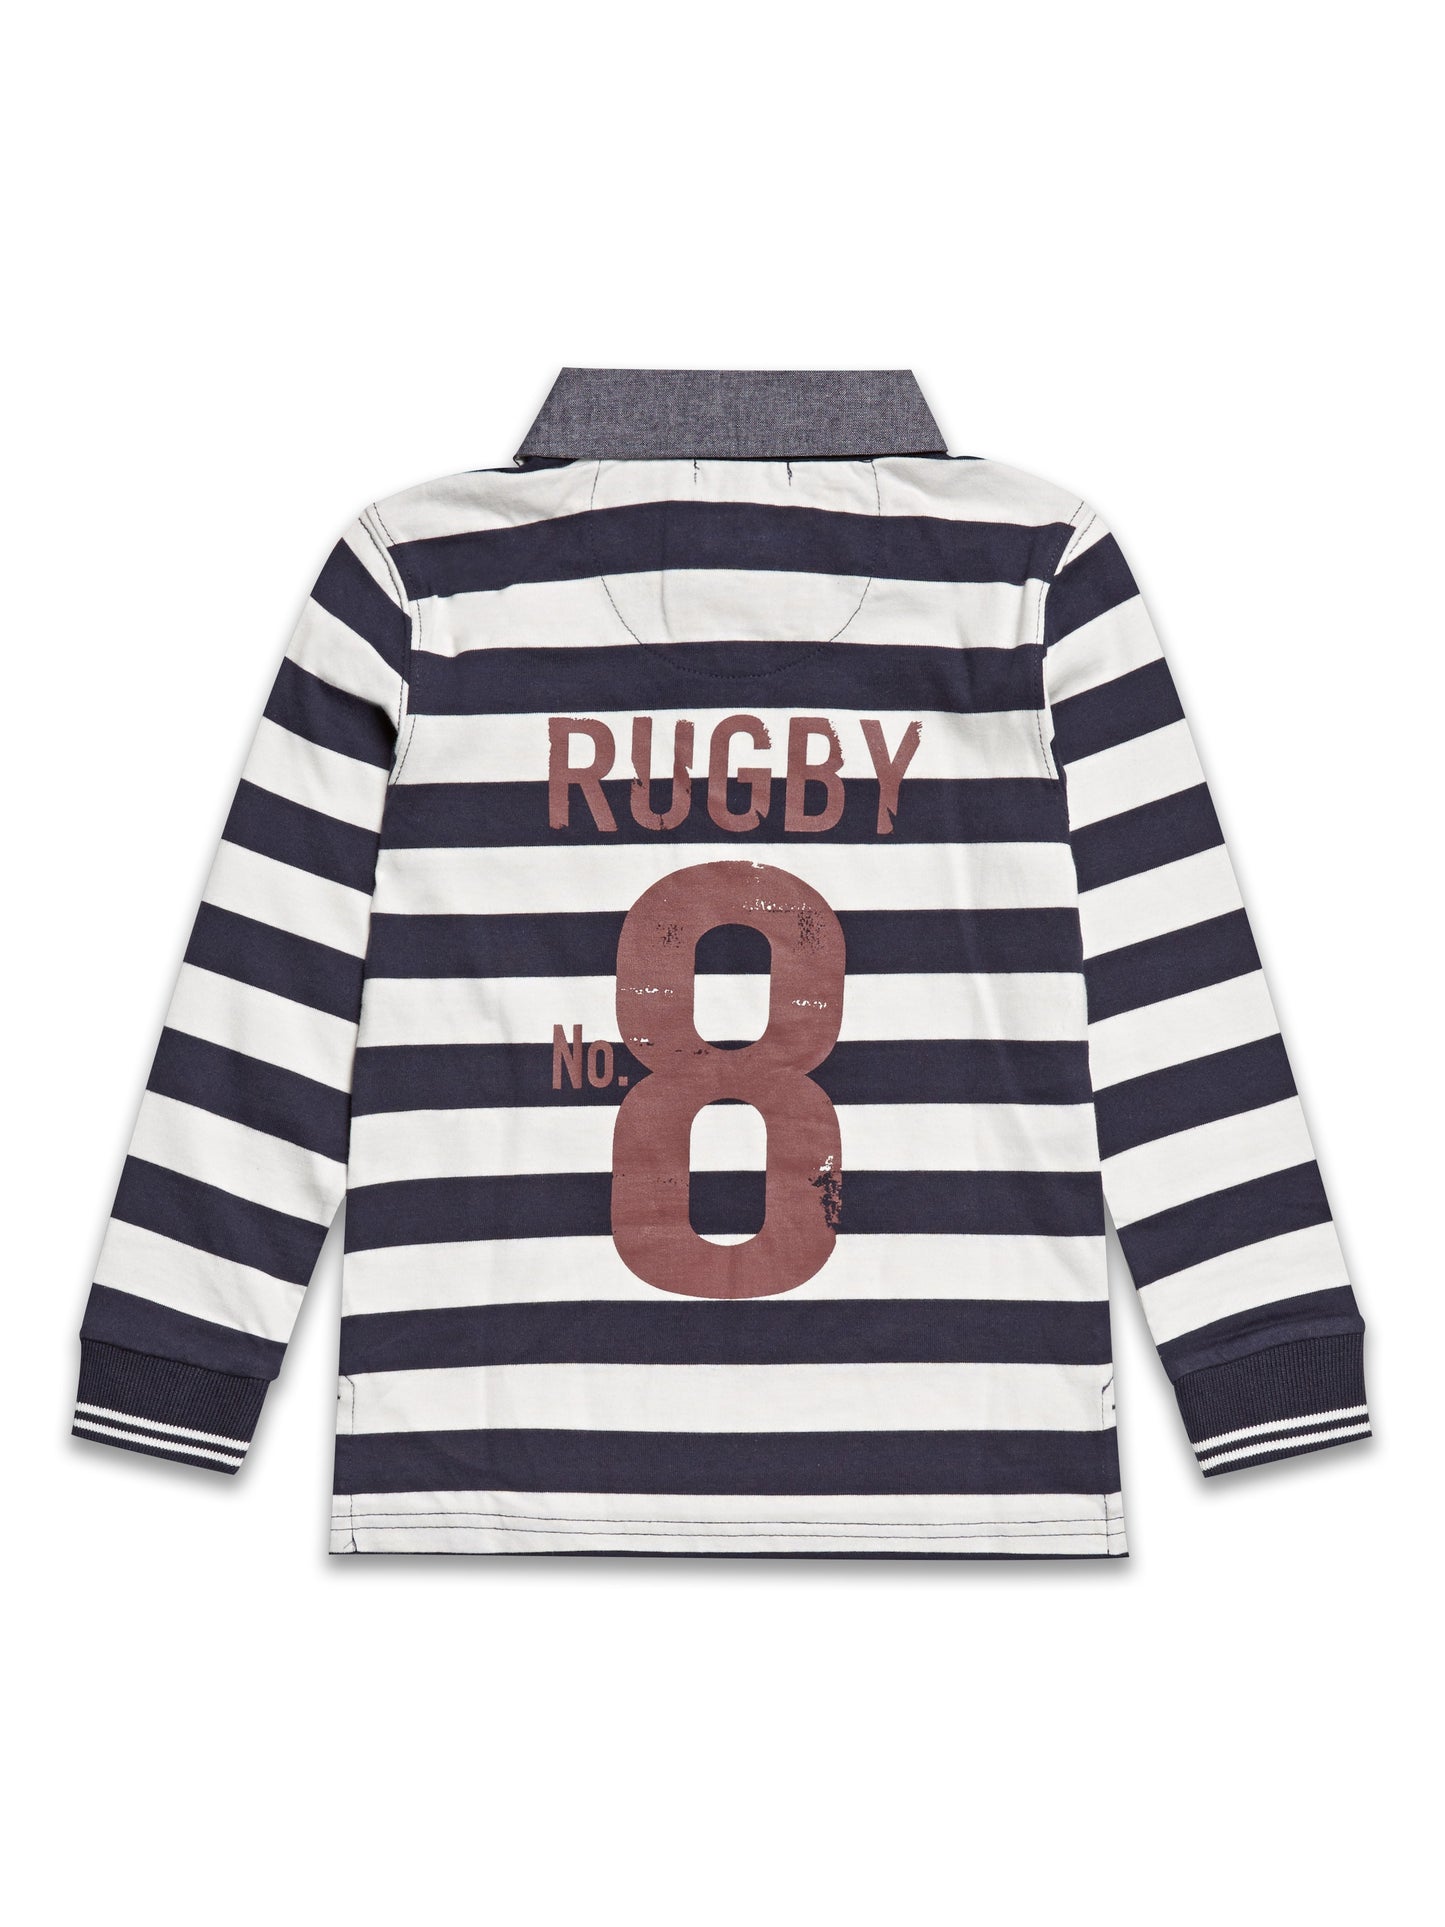 Boys Rugby Cotton Shirt